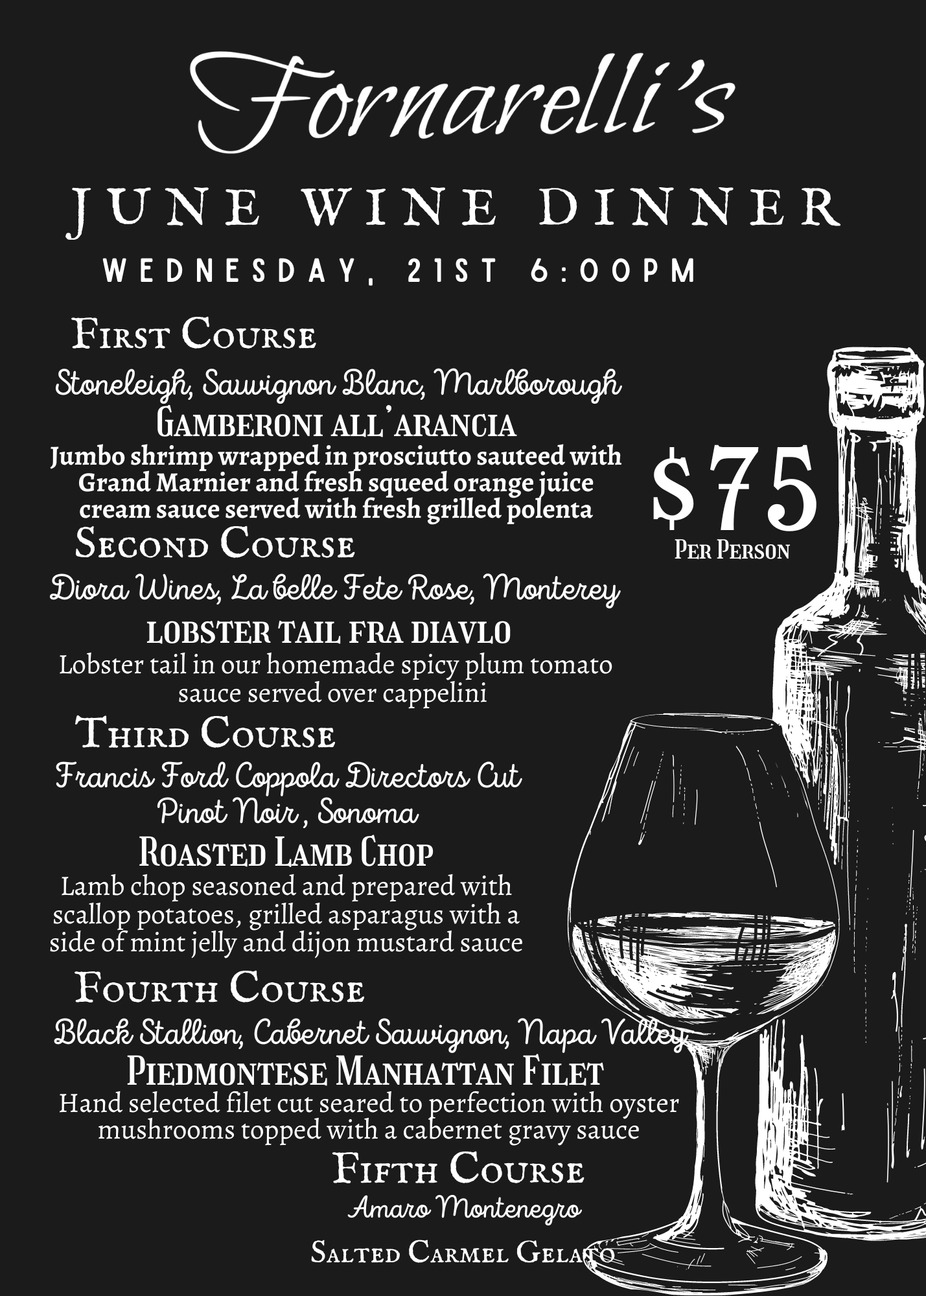 June Wine Dinner event photo